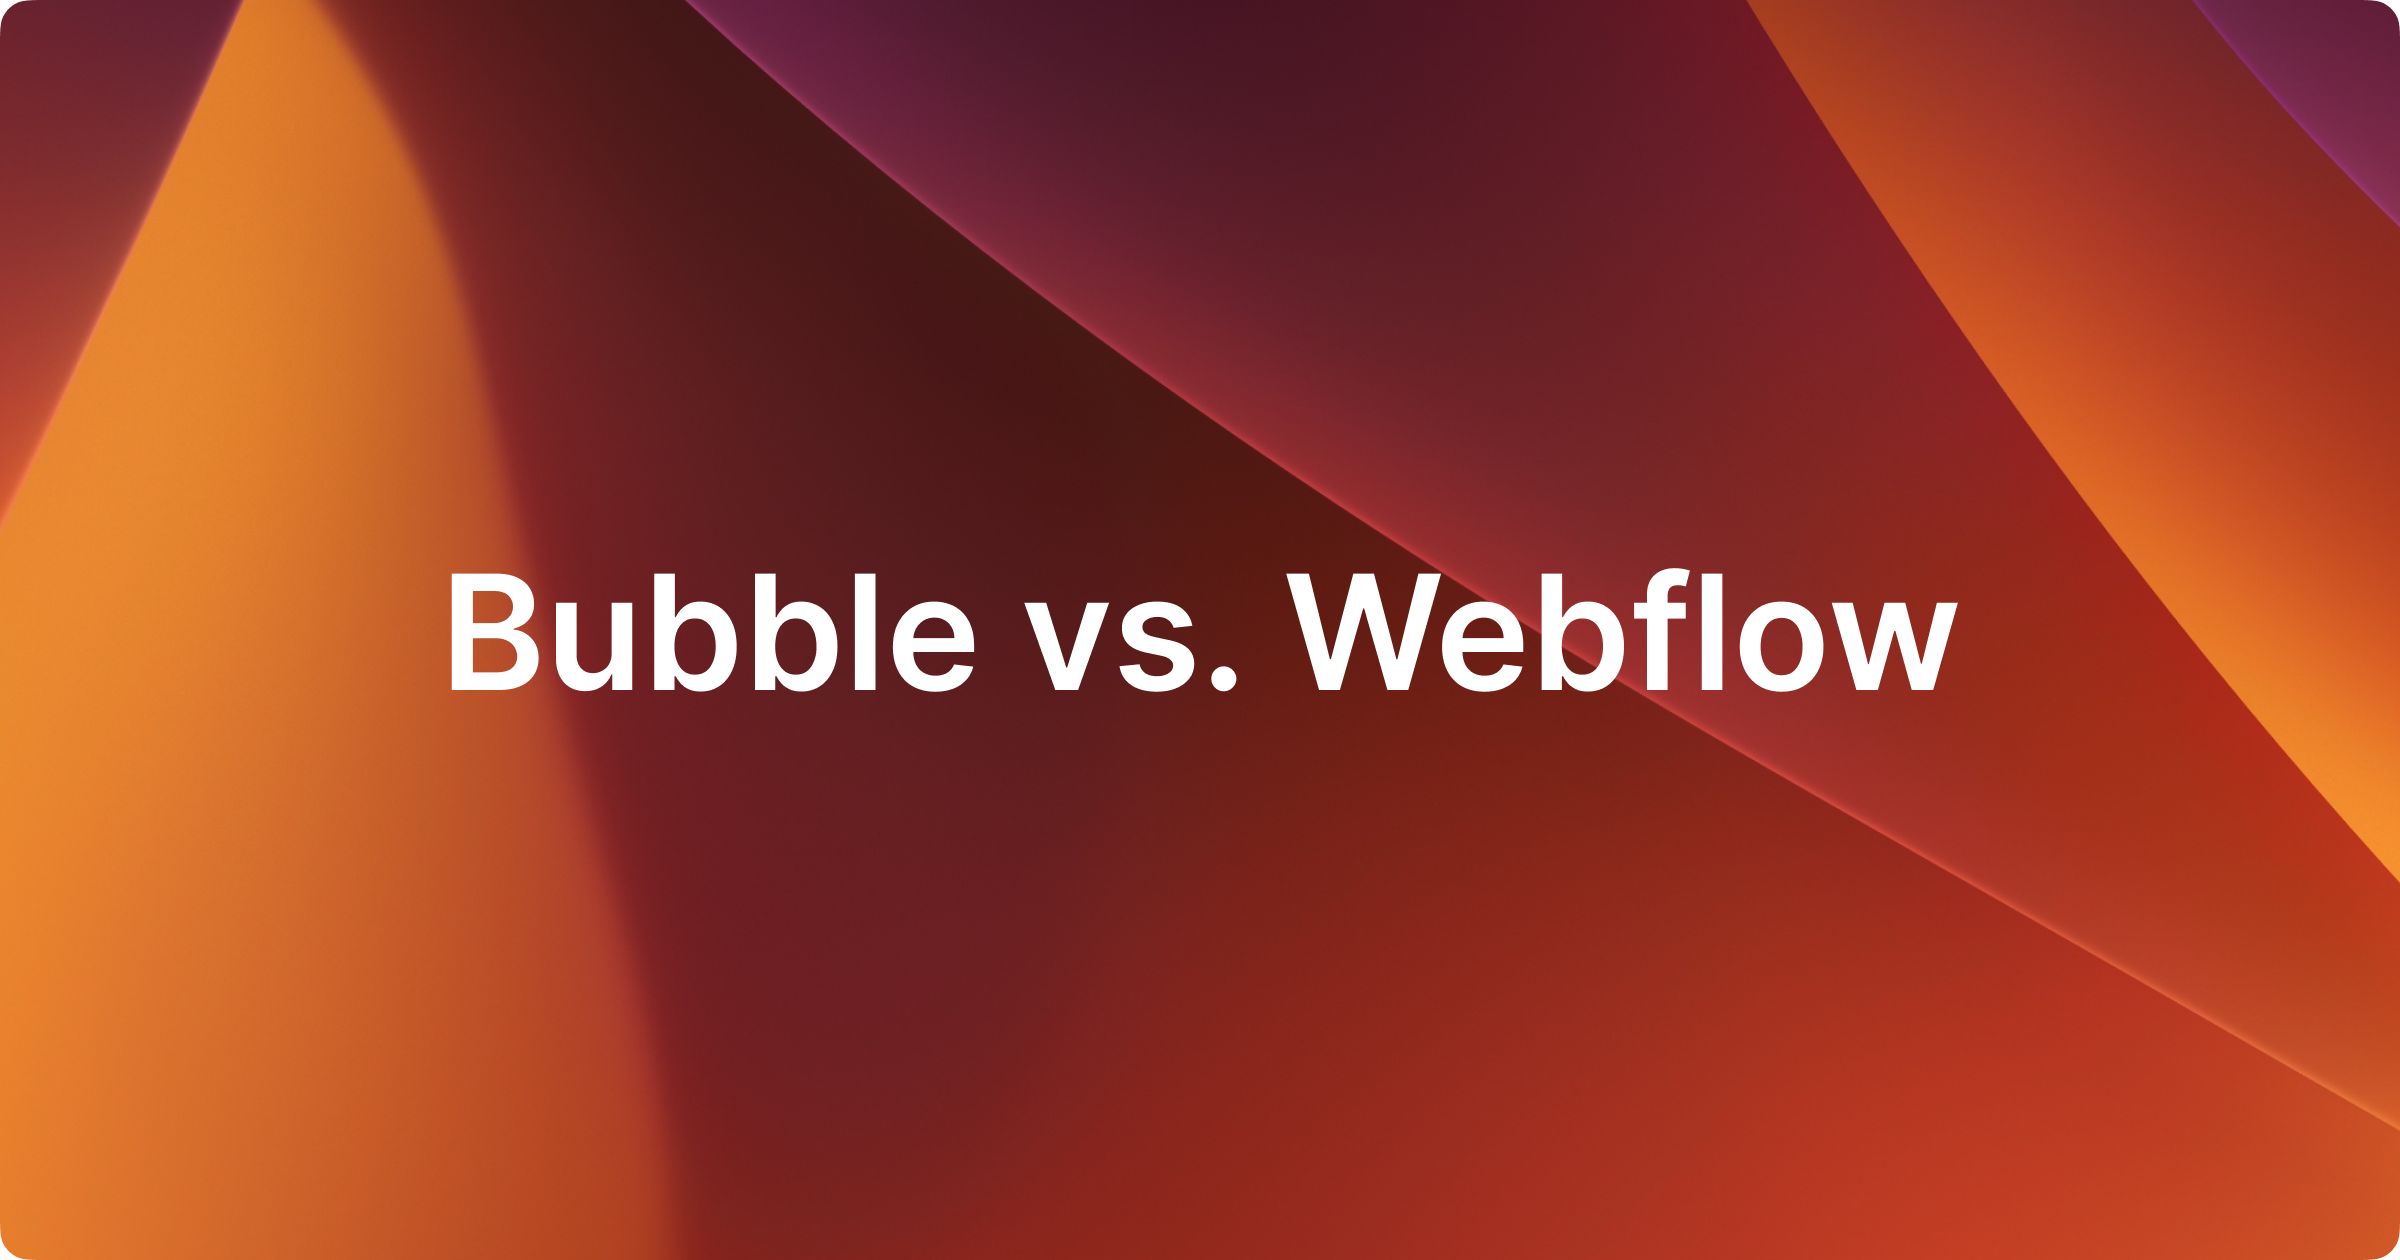 A thorough comparison between Bubble vs. Webflow for building your no-code website.